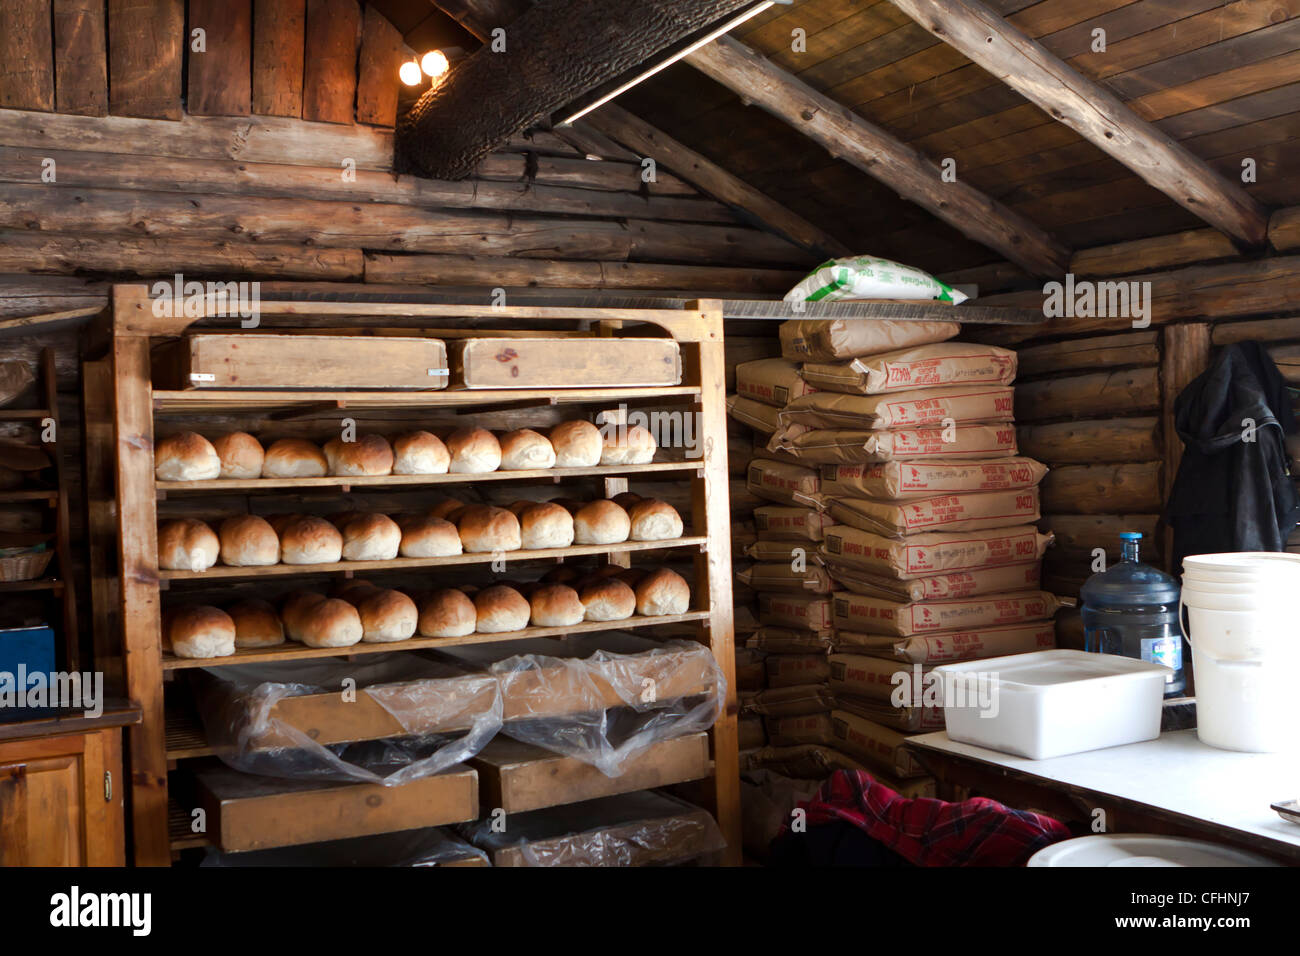 Traditionally baked bread in bakery Stock Photo